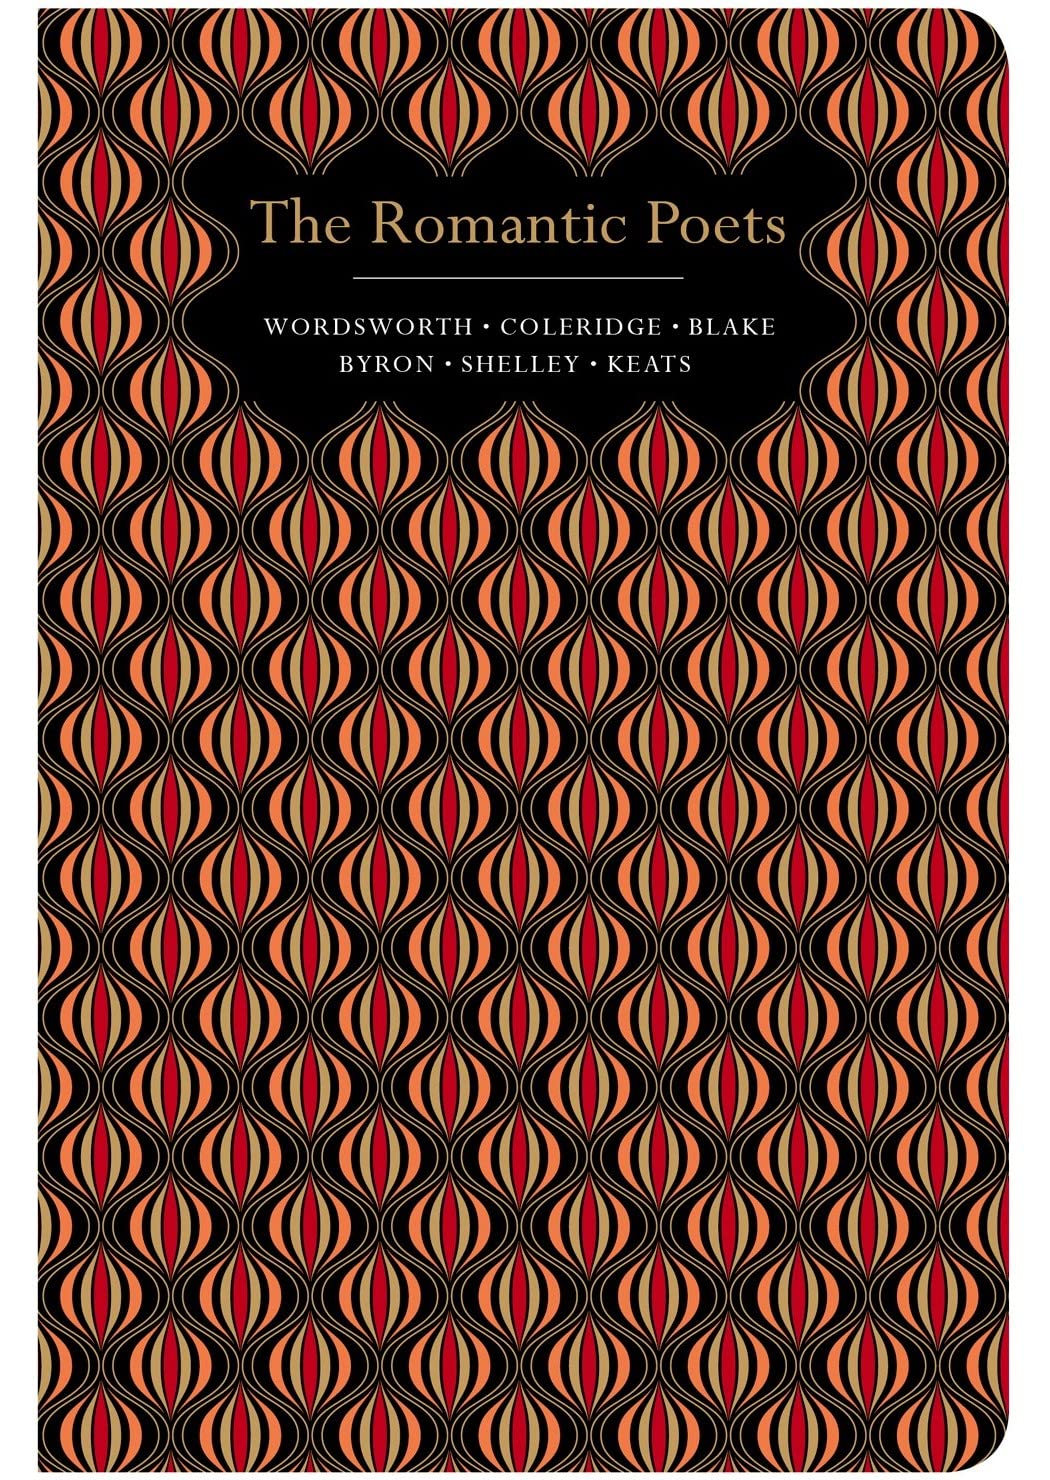 The Romantic Poets: Wordsworth, Coleridge, Blake, Byron, Shelley & Keats